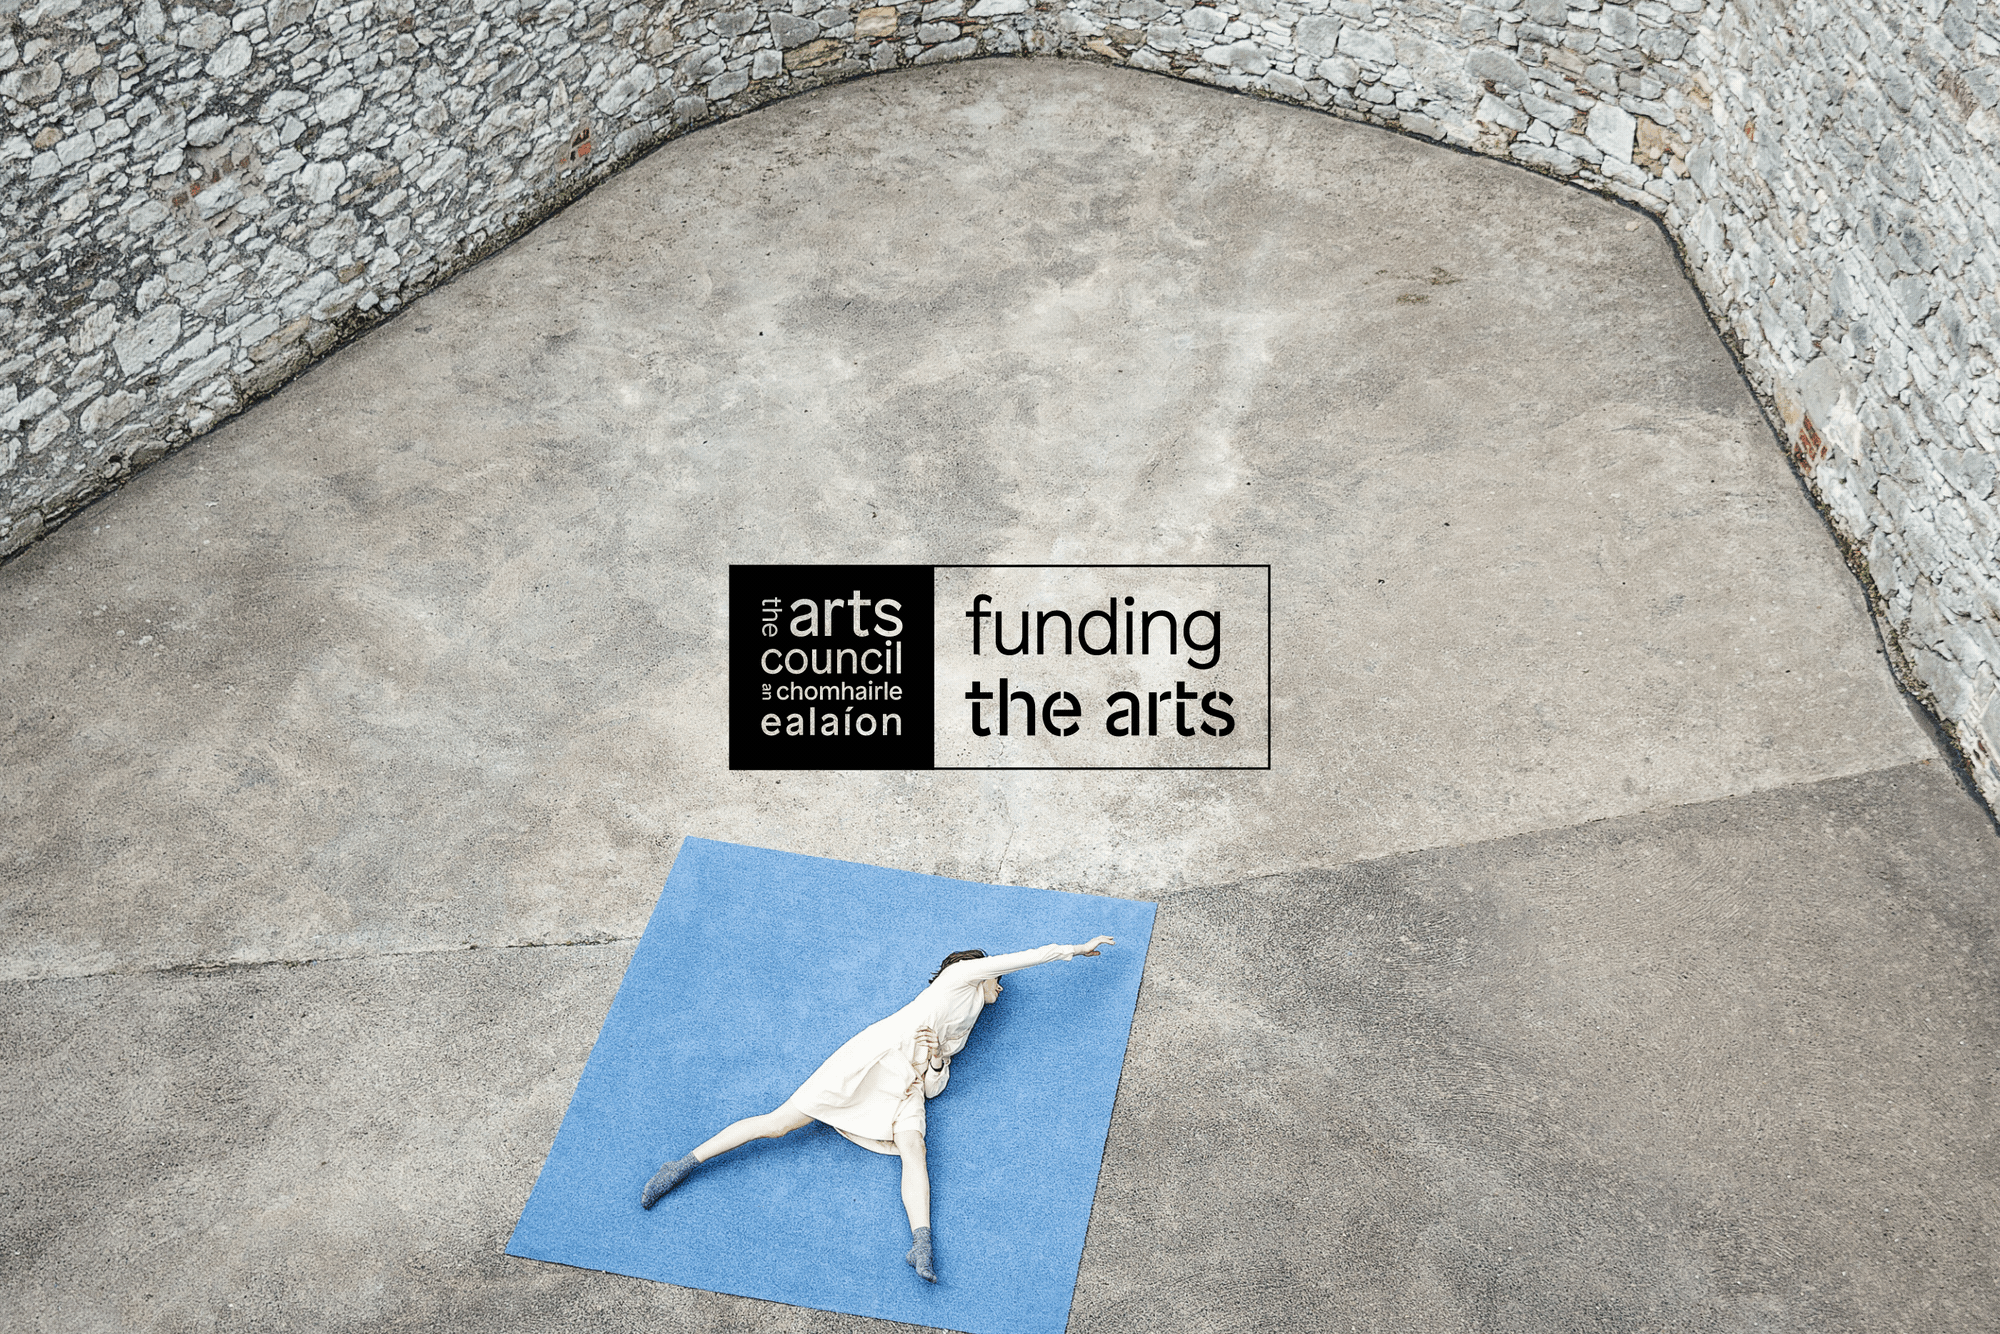 Cover image: Arts Council Funding Logos